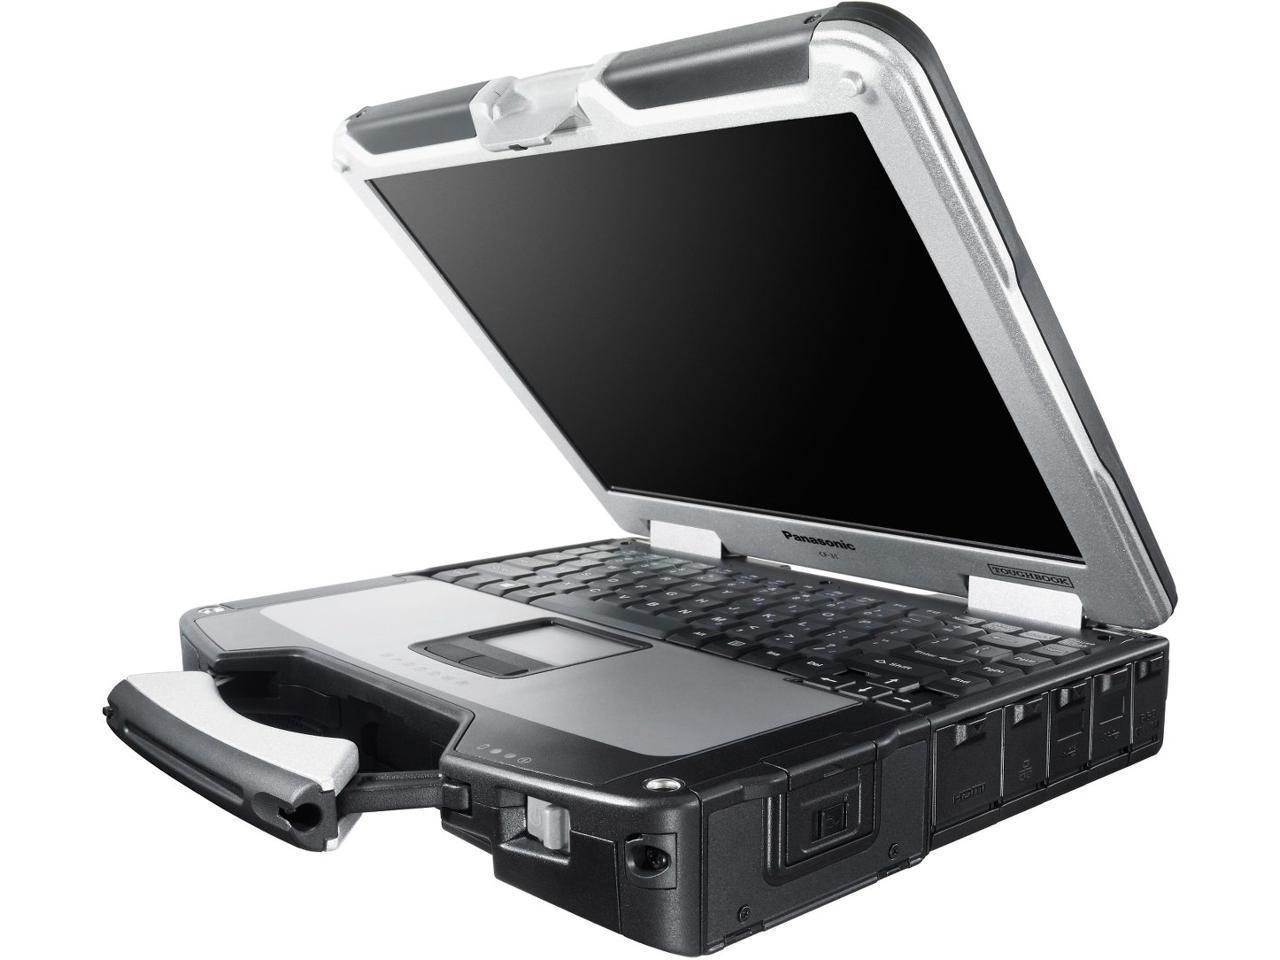 Panasonic Toughbook CF-31 MK4, Rugged Laptop, A Grade, 13.1